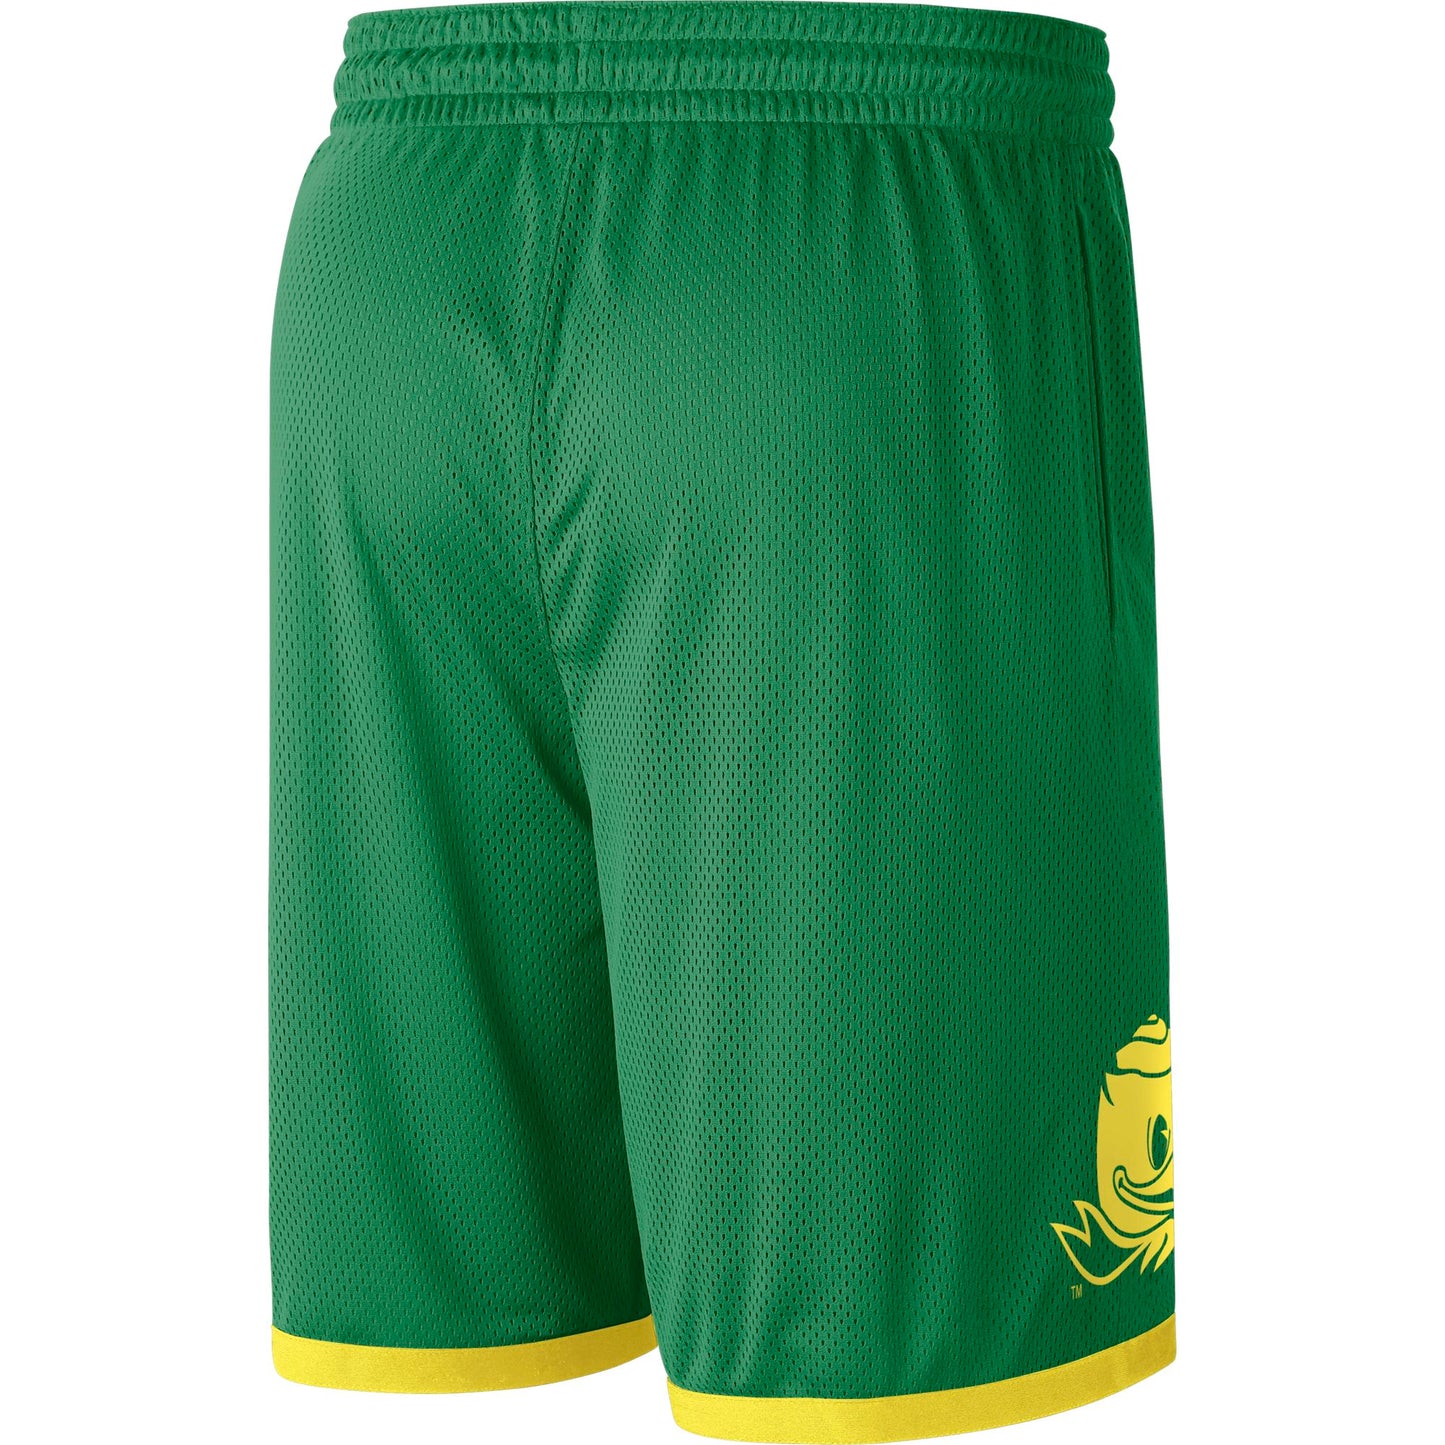 Nike NCAA Oregon Ducks Apple Green Dry Shorts